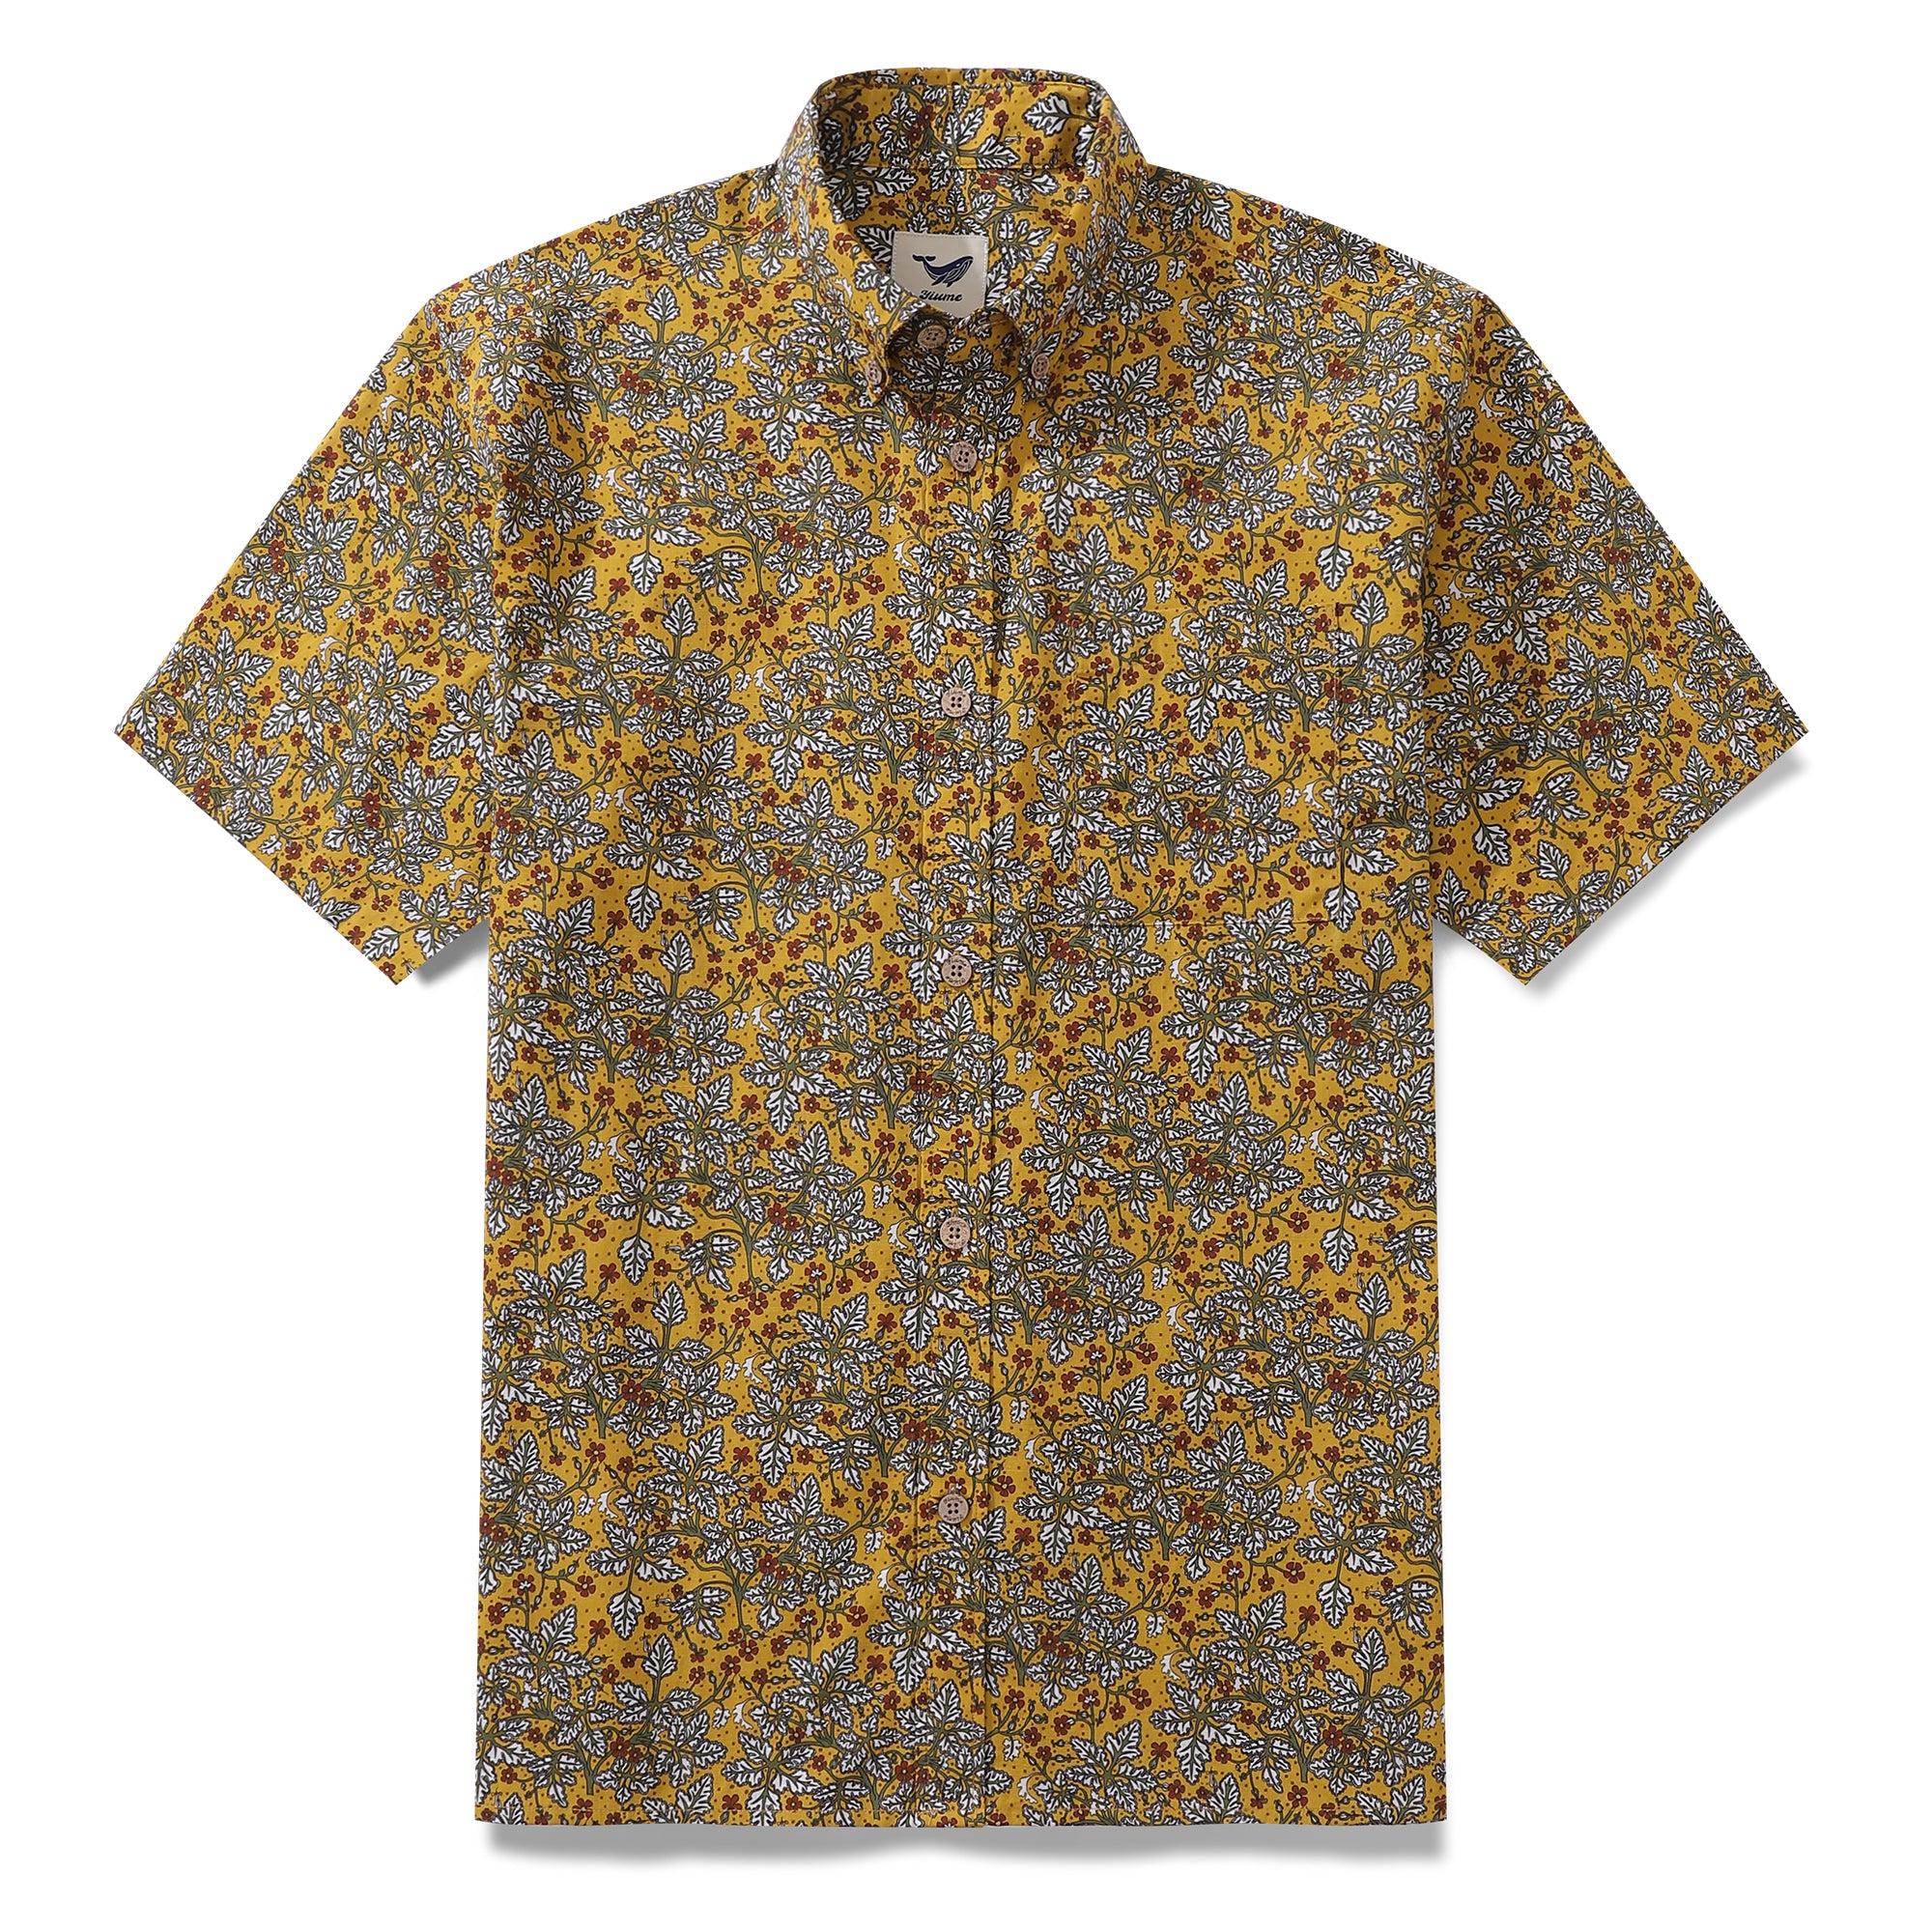 Men's Hawaiian Shirt Leaves and Flowers Print Cotton Button-down Short Sleeve Aloha Shirt